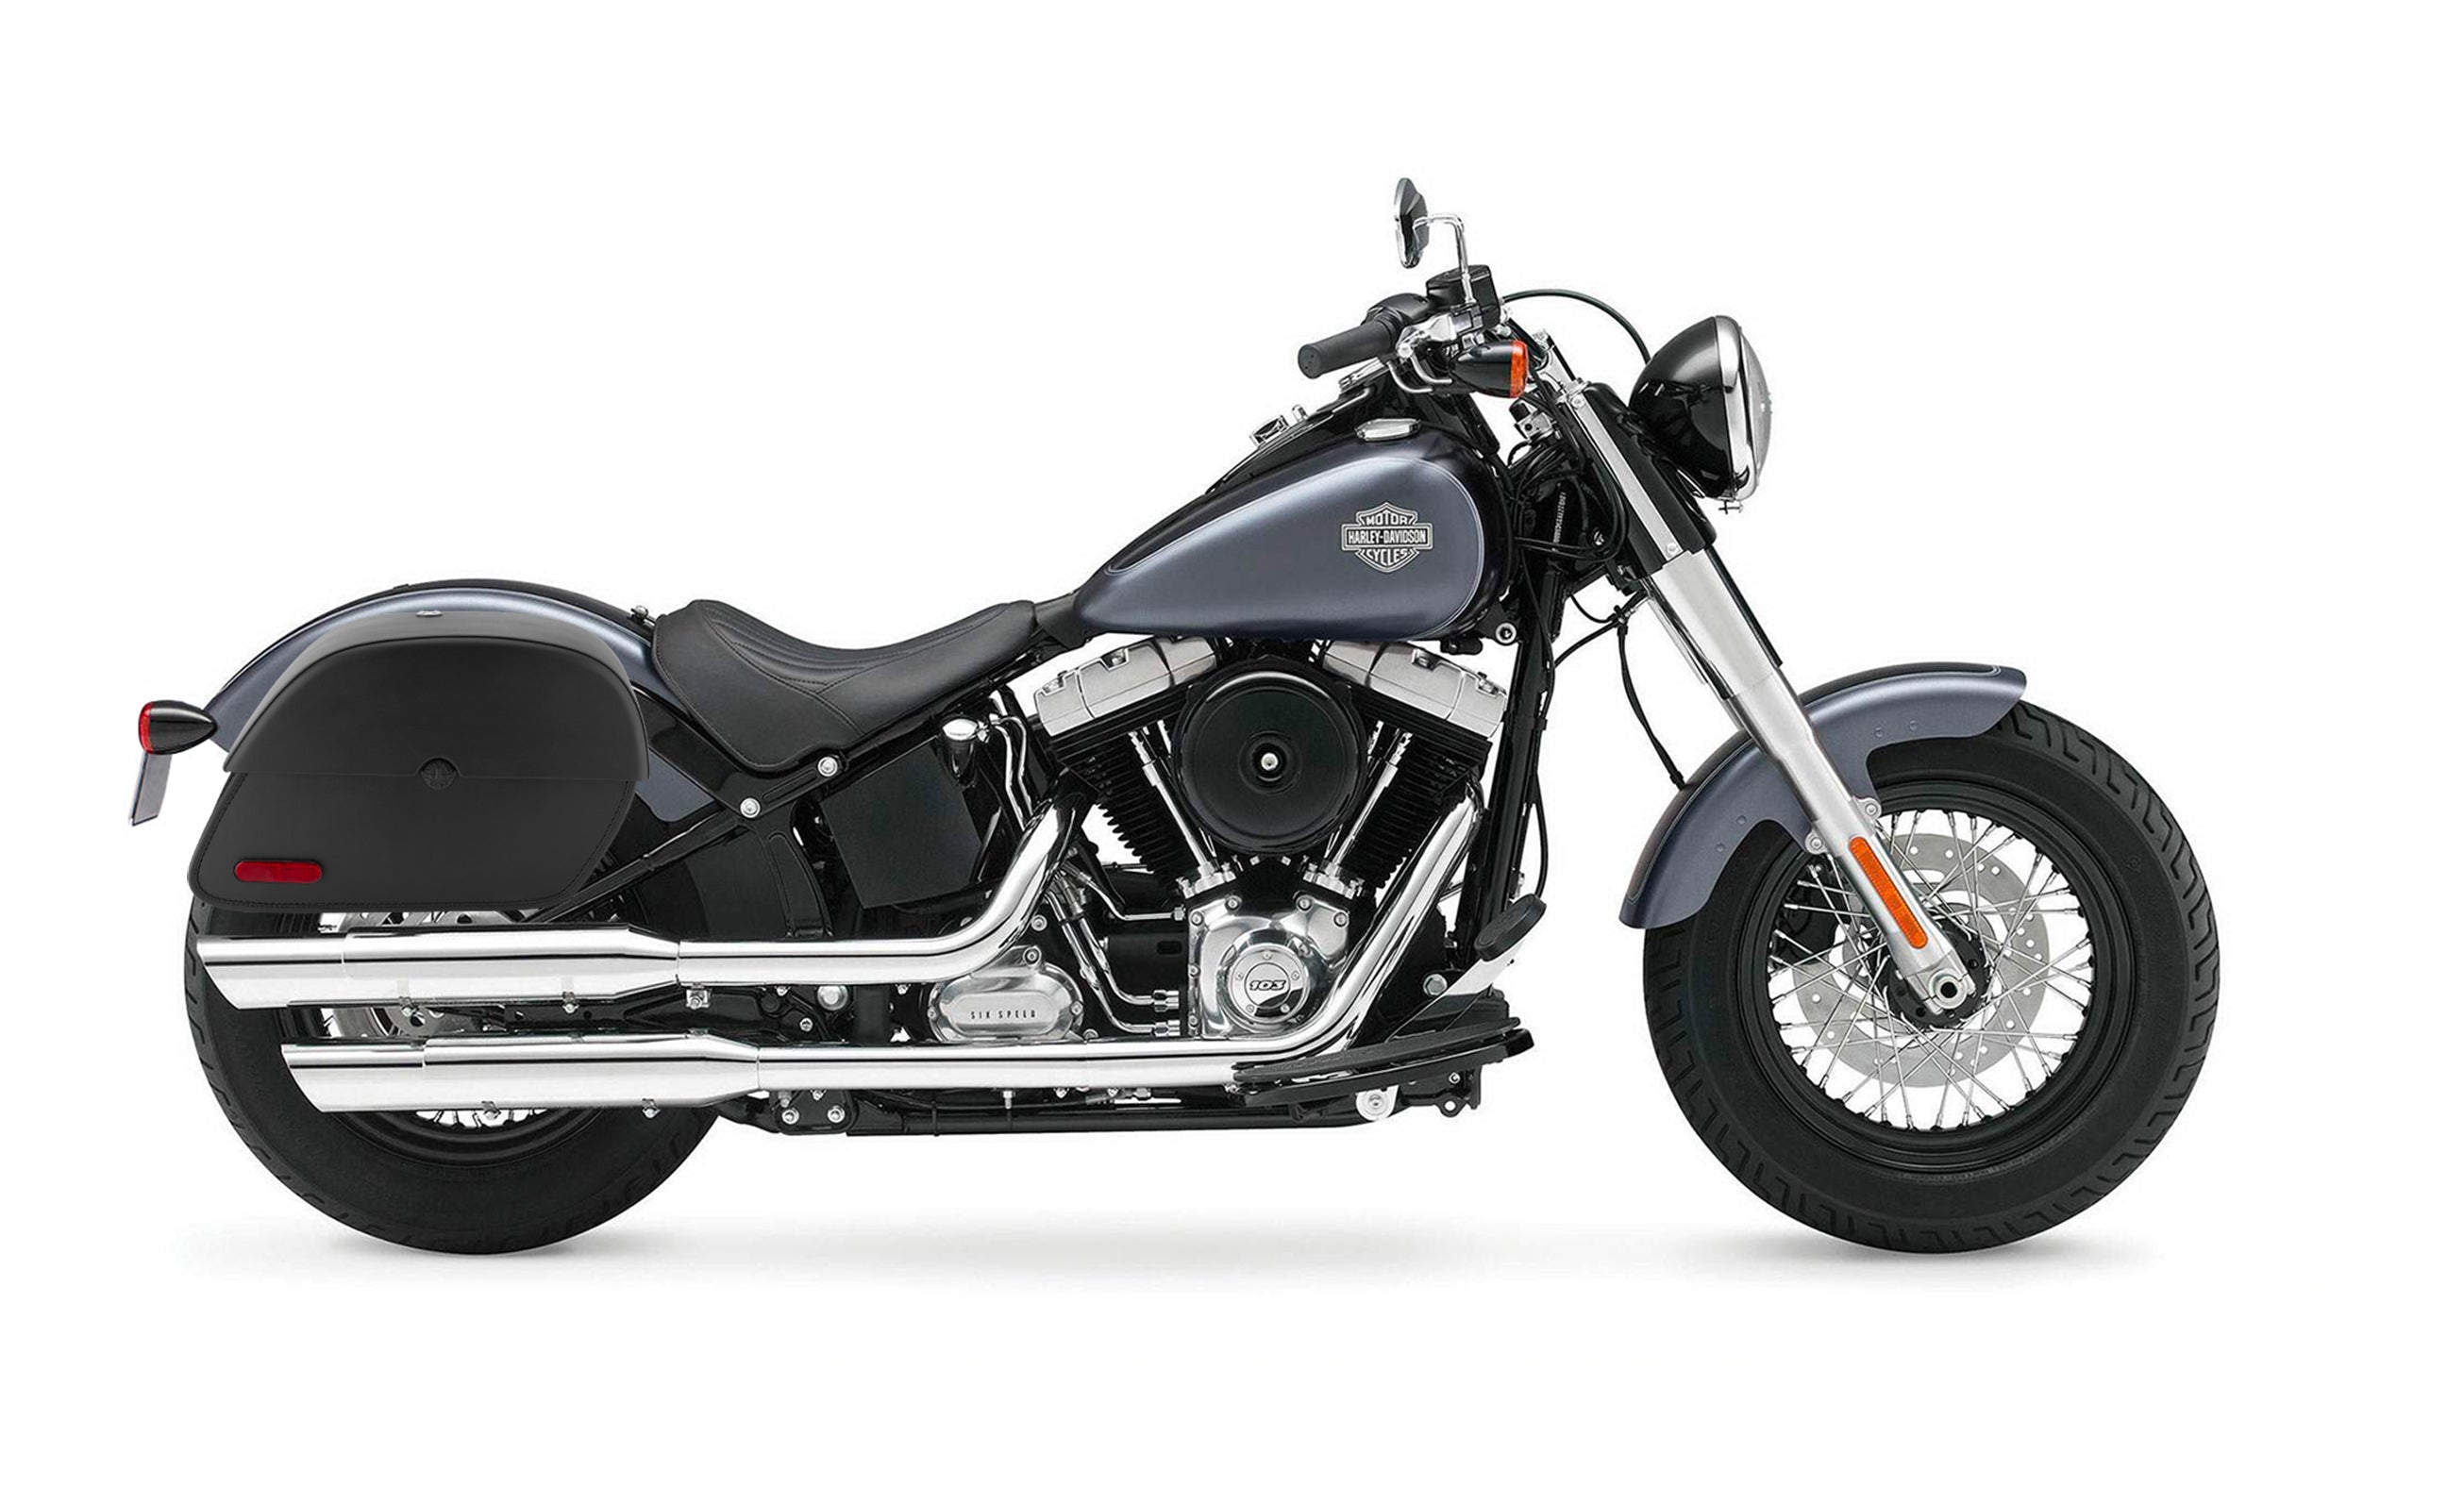 28L - Panzer Medium Motorcycle Saddlebags for Harley Davidson Softail Slim FLS on Bike Photo @expand